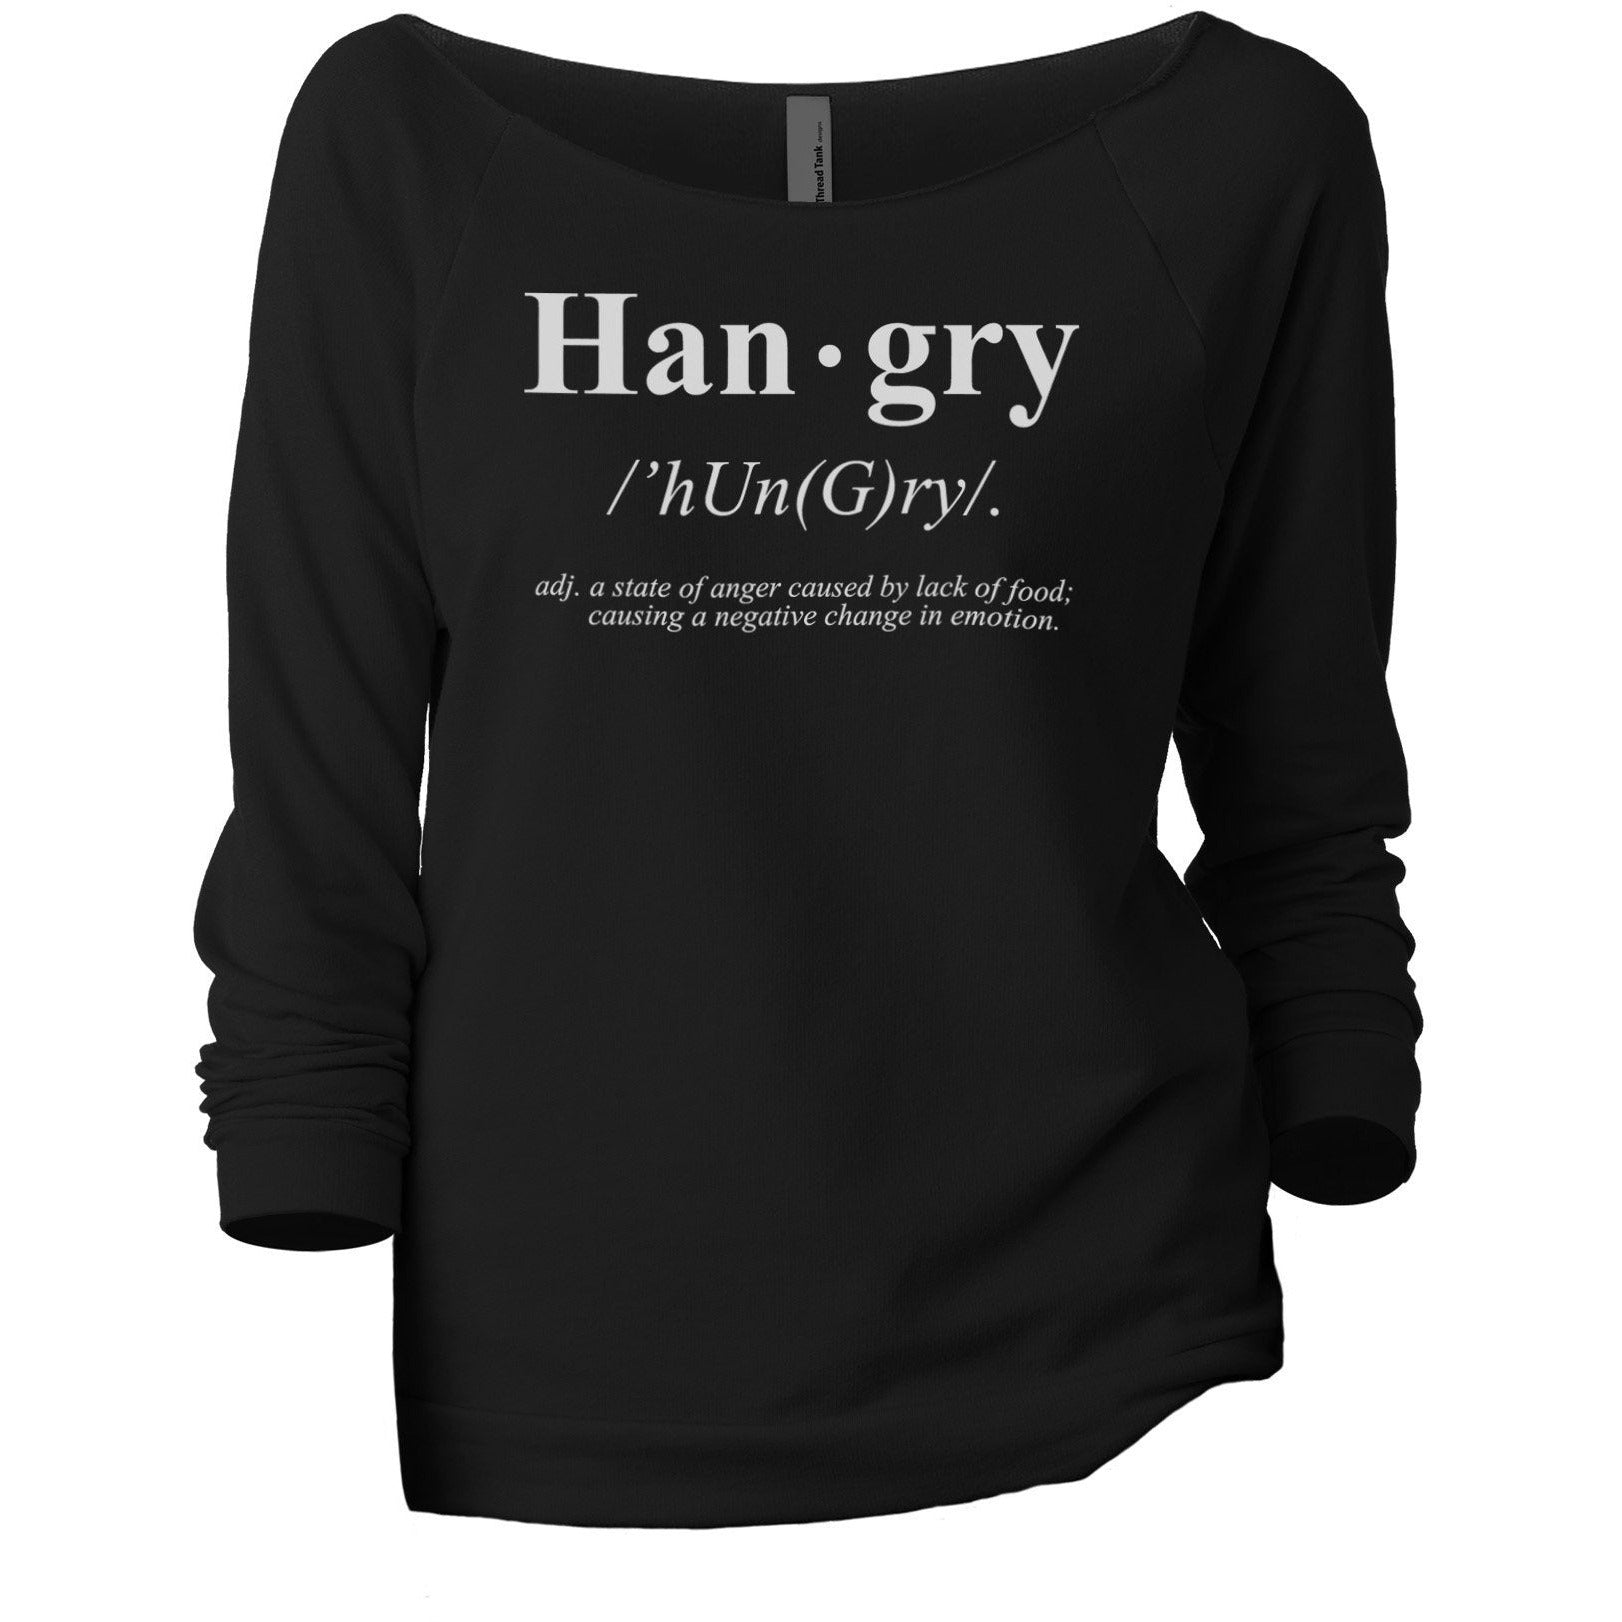 HanGry Women's Graphic Printed Lightweight Slouchy 3/4 Sleeves Sweatshirt Black